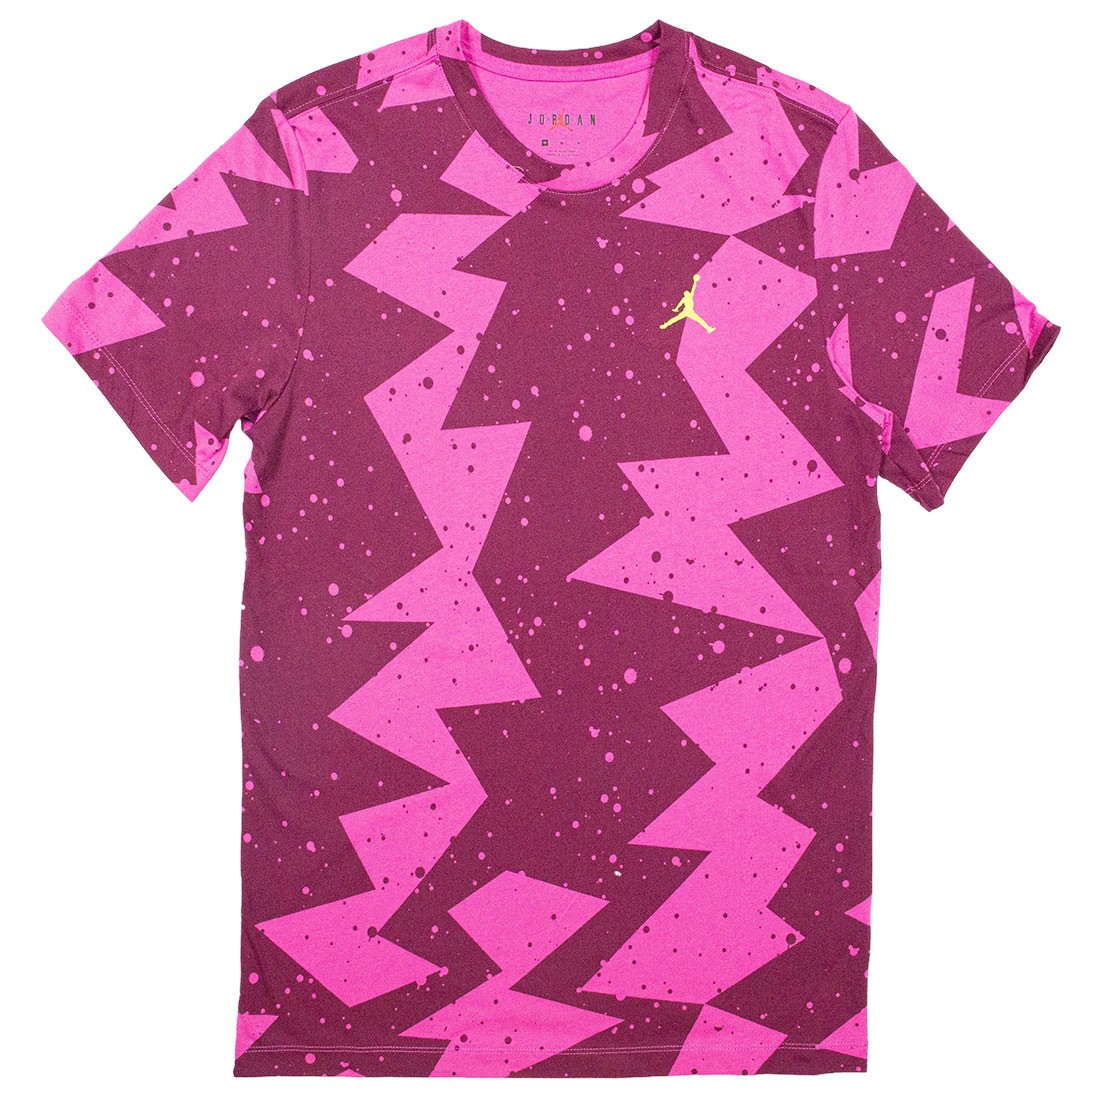 jordan poolside shirt pink